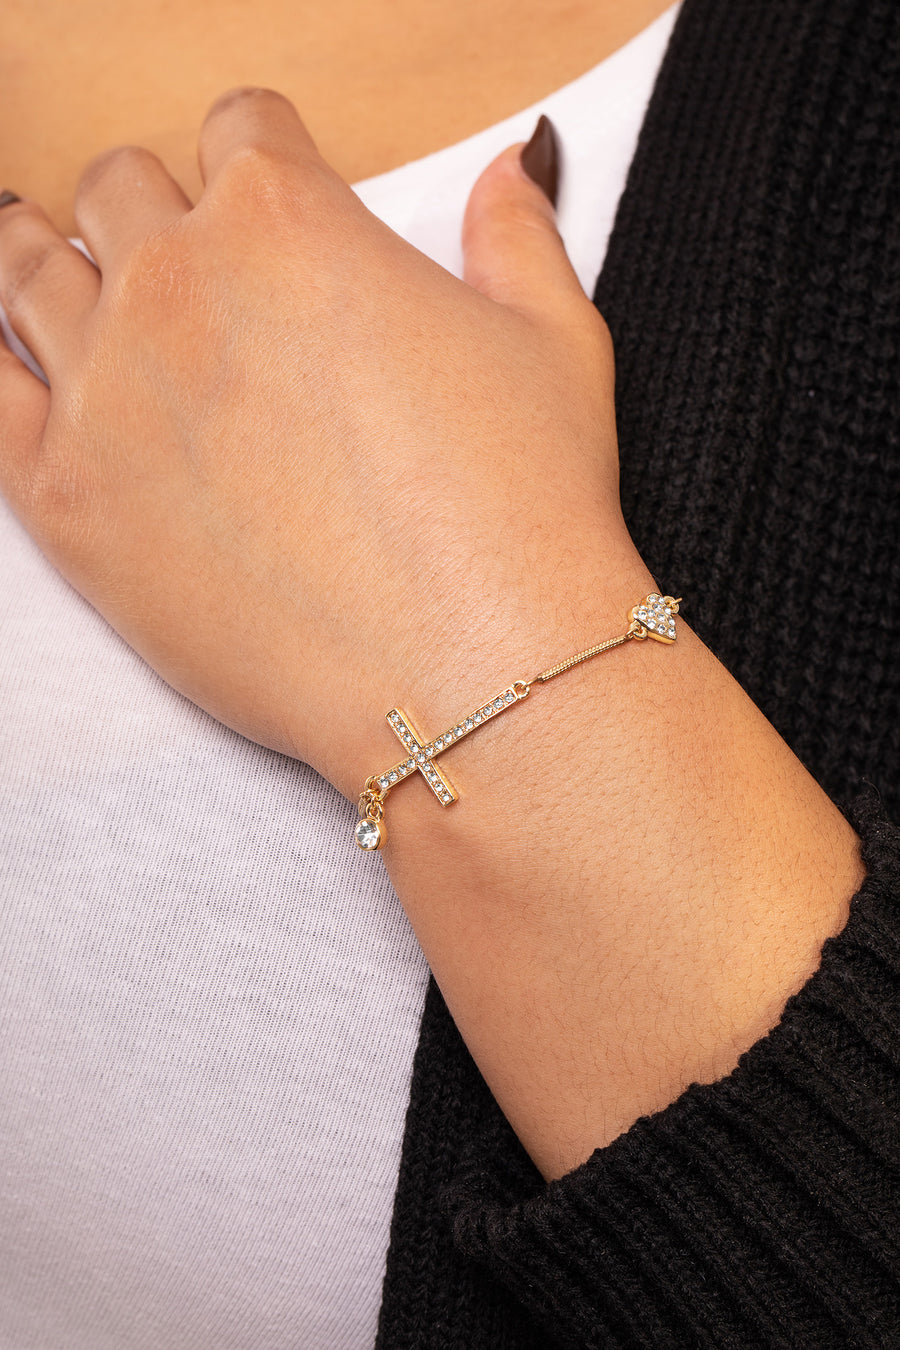 gold sparkly cross friendship bracelet heart 